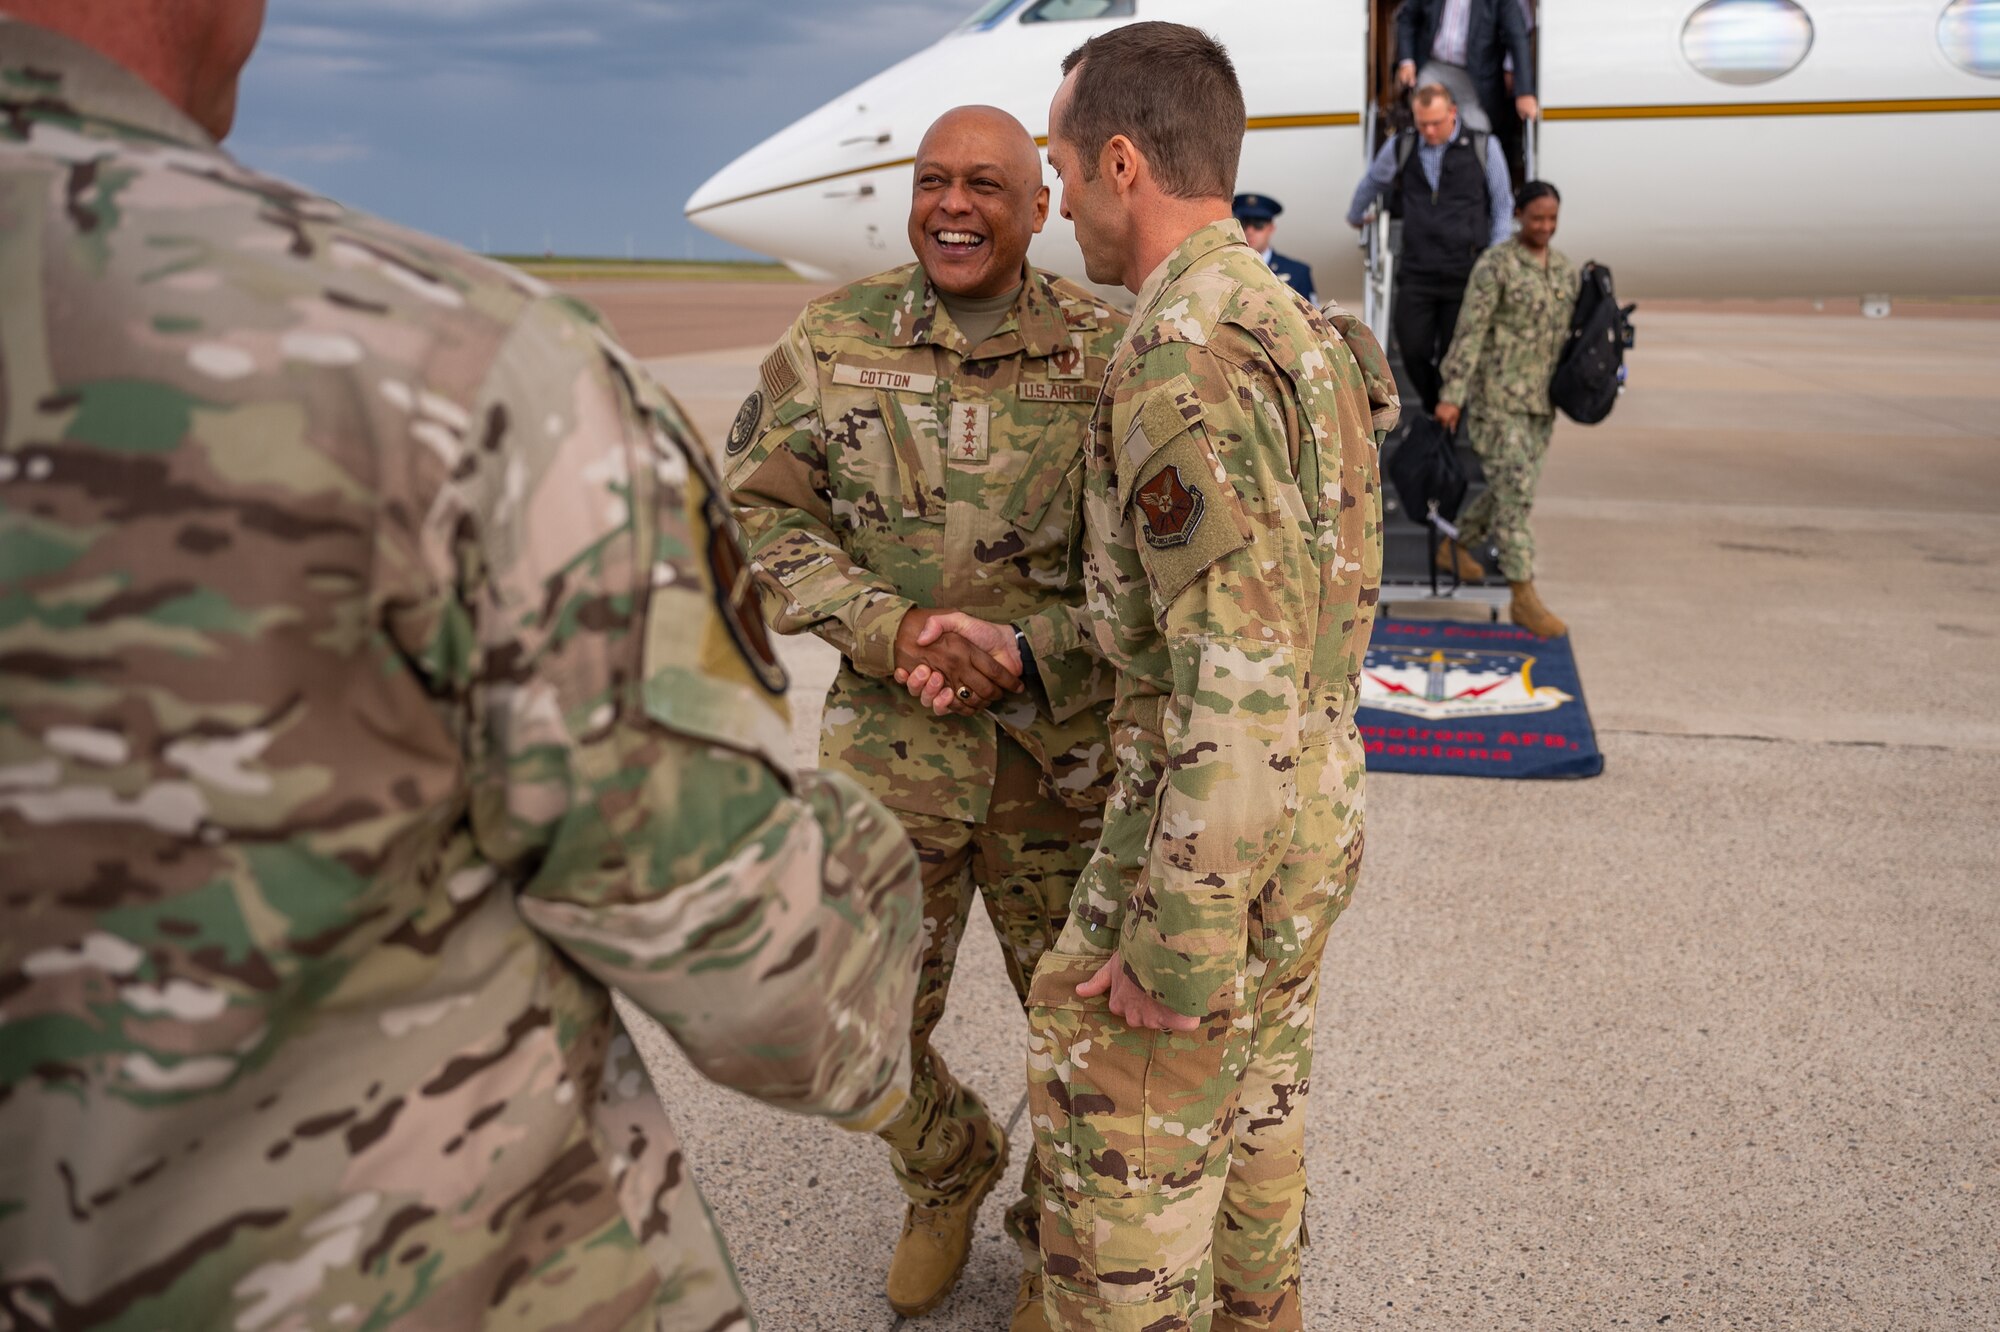 Two men in military uniform greet each other via handshake.